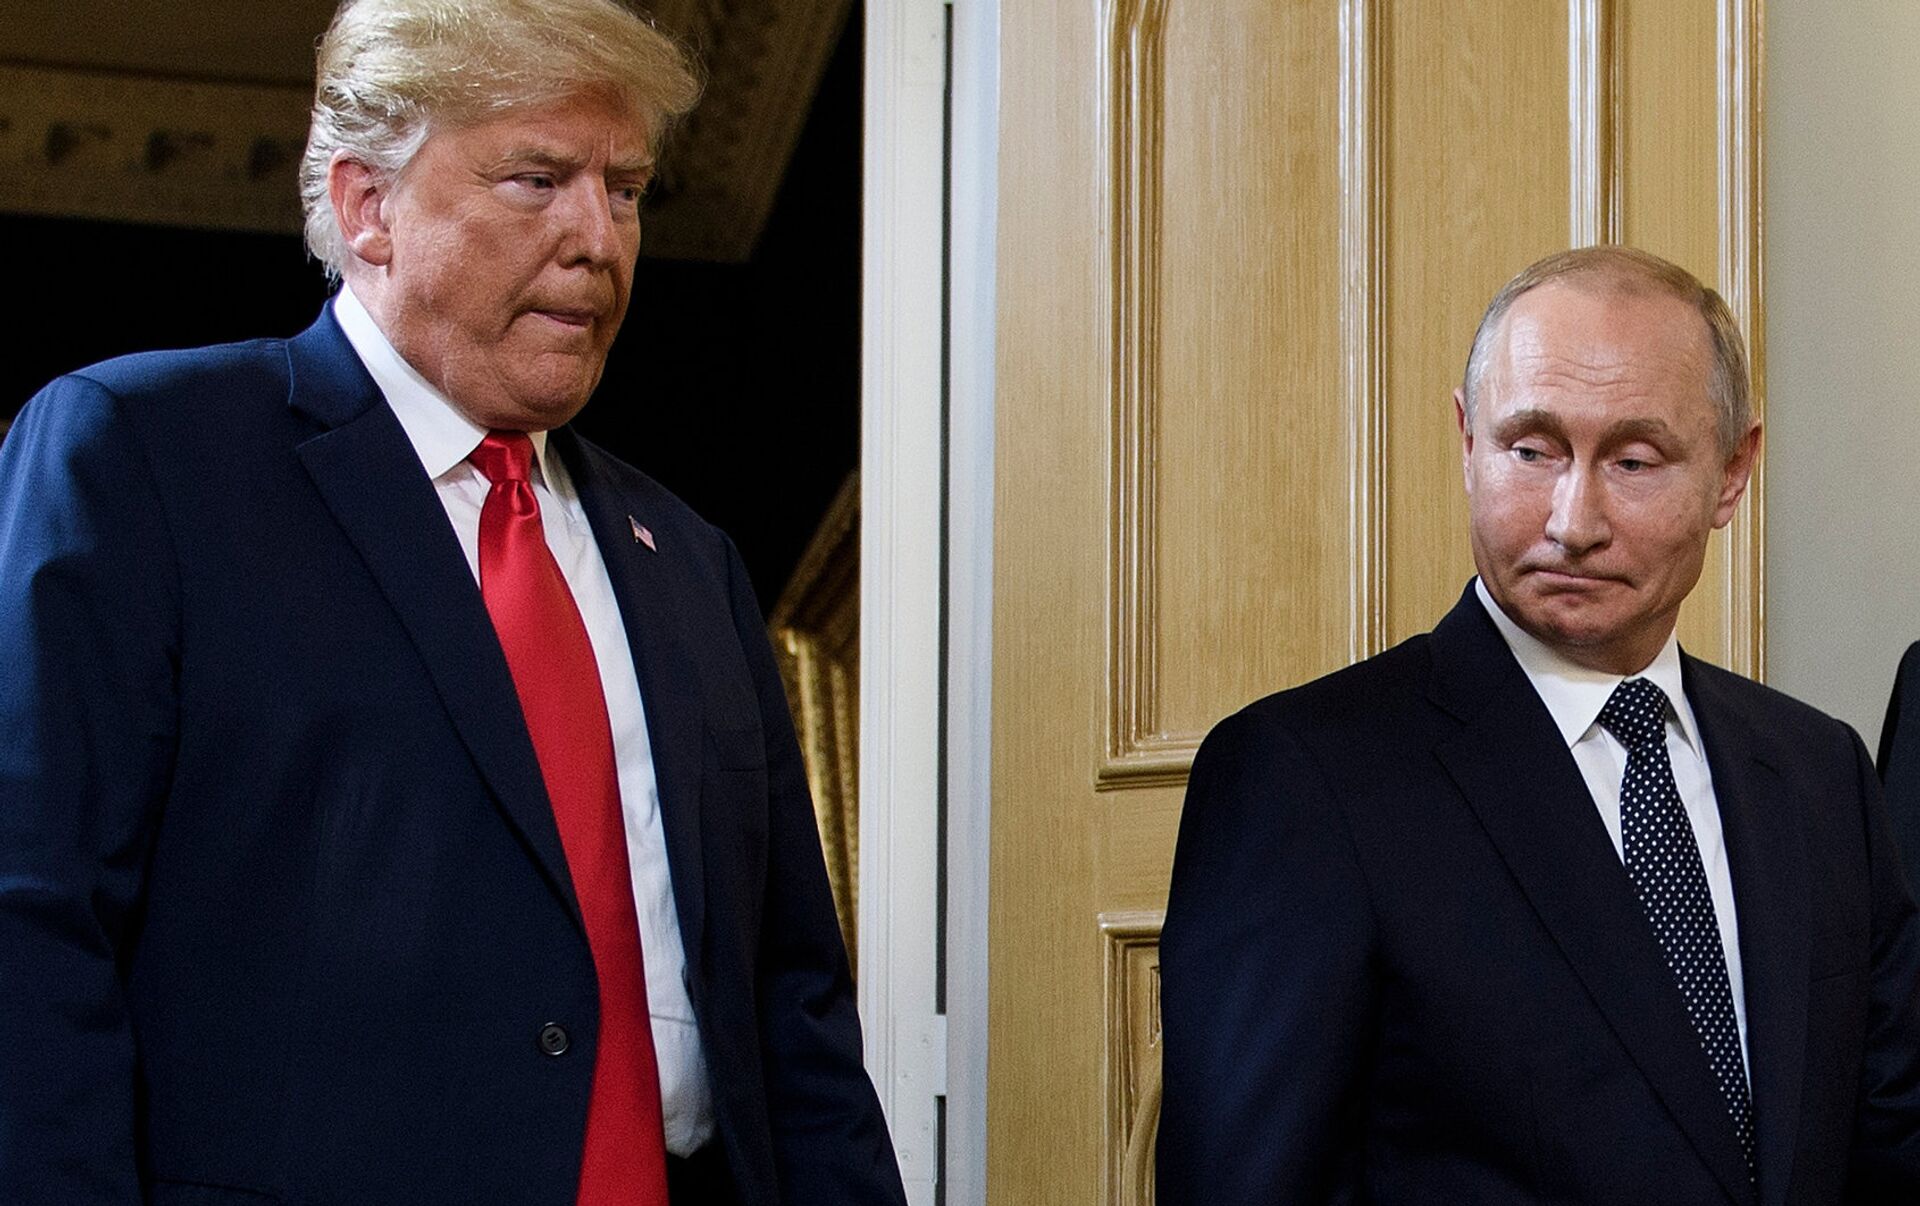 G20峰会前普京与特朗普热烈交谈 - 2019年6月28日, 俄罗斯卫星通讯社